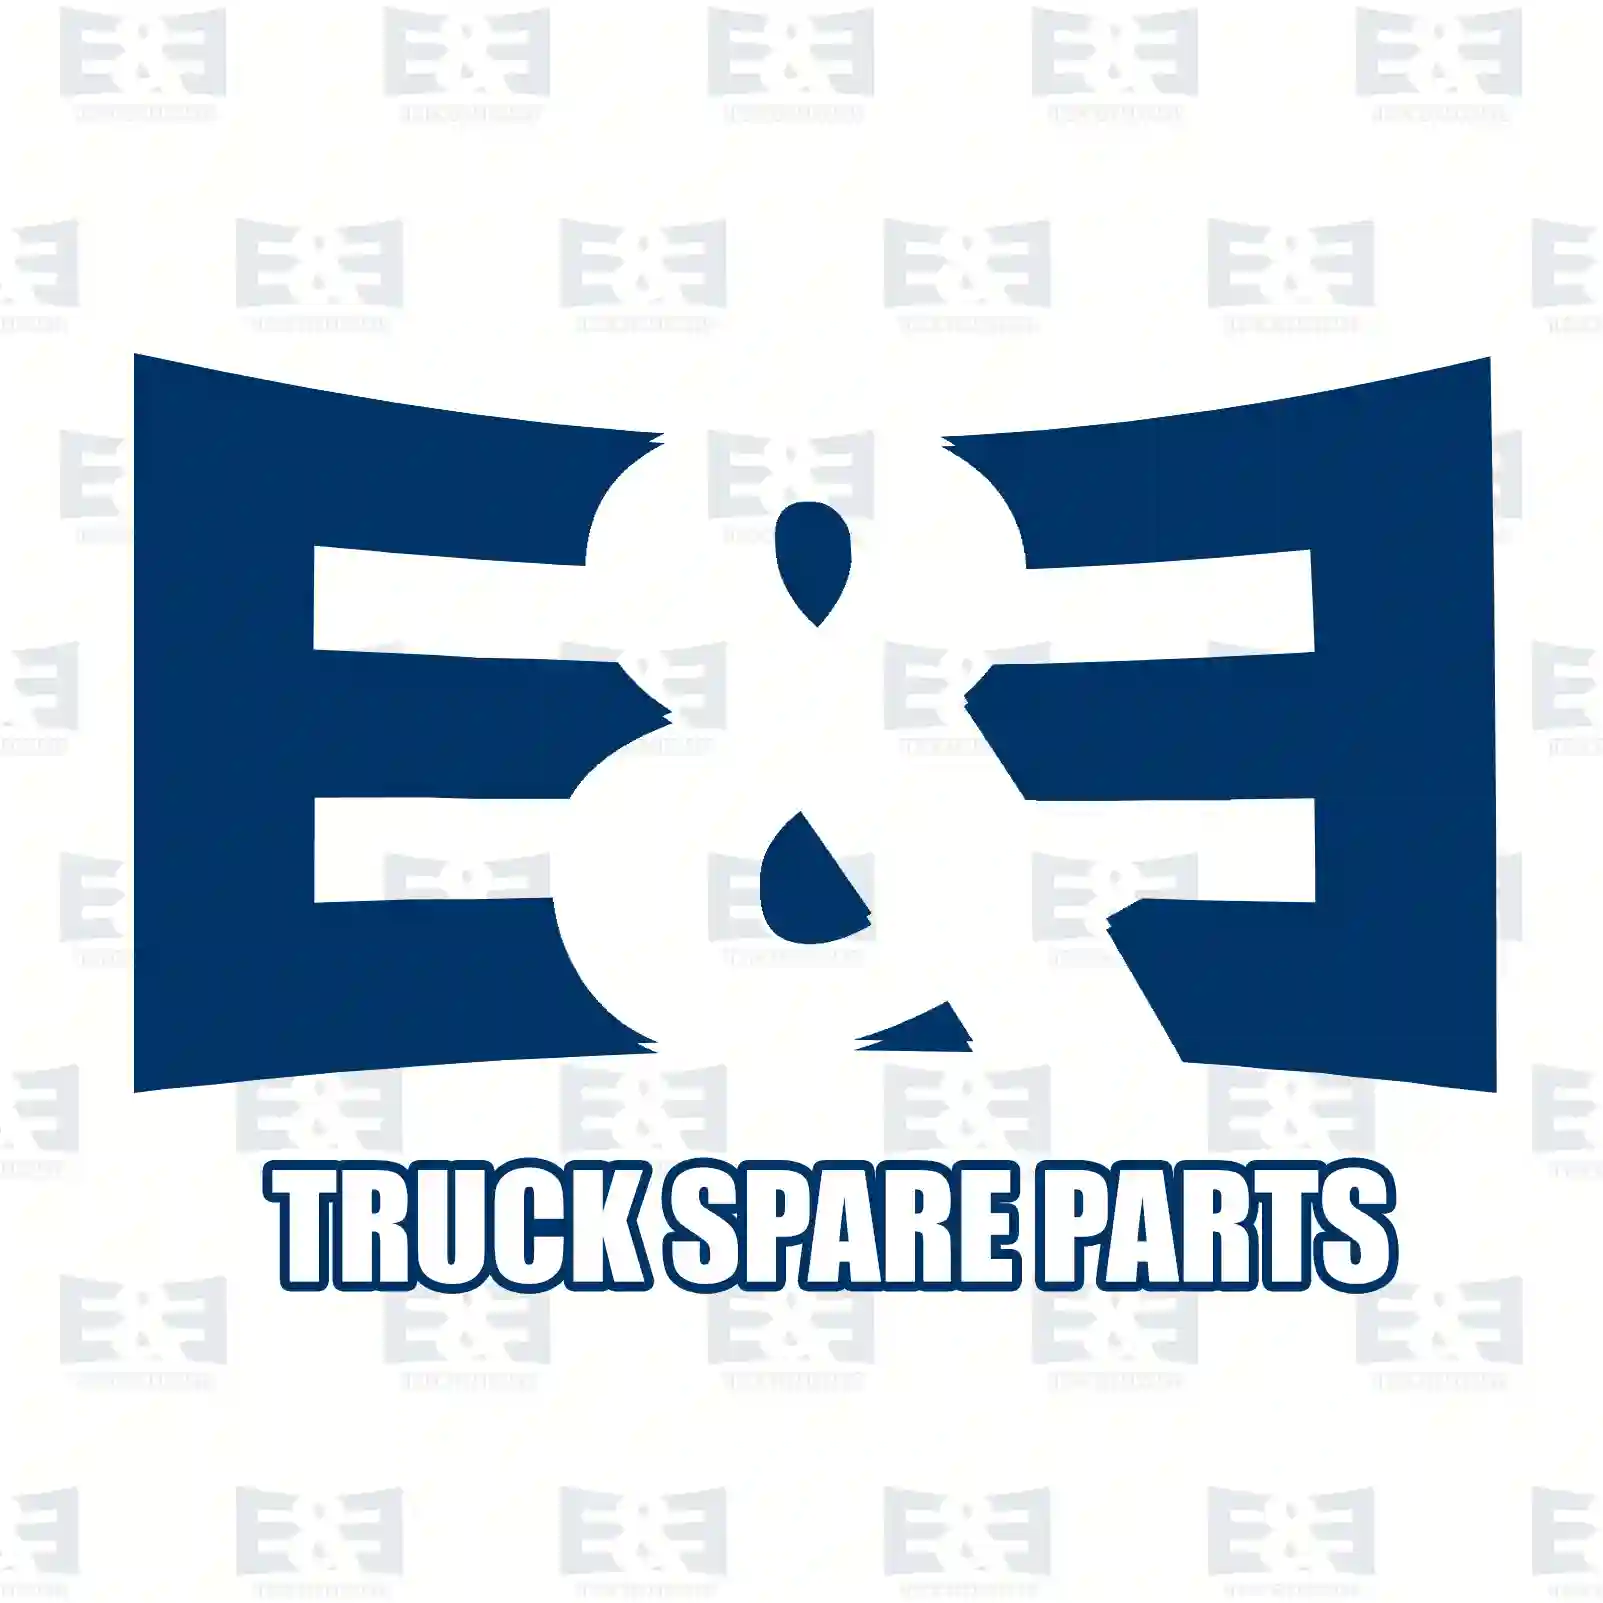 Control panel, door, driver side, 2E2298975, 0015452713, 00154527137C45, 0025452713, 00254527137C45, 0025456113, 0025456813, 0035452713, 0045452713, 0055450713, ZG60411-0008 ||  2E2298975 E&E Truck Spare Parts | Truck Spare Parts, Auotomotive Spare Parts Control panel, door, driver side, 2E2298975, 0015452713, 00154527137C45, 0025452713, 00254527137C45, 0025456113, 0025456813, 0035452713, 0045452713, 0055450713, ZG60411-0008 ||  2E2298975 E&E Truck Spare Parts | Truck Spare Parts, Auotomotive Spare Parts